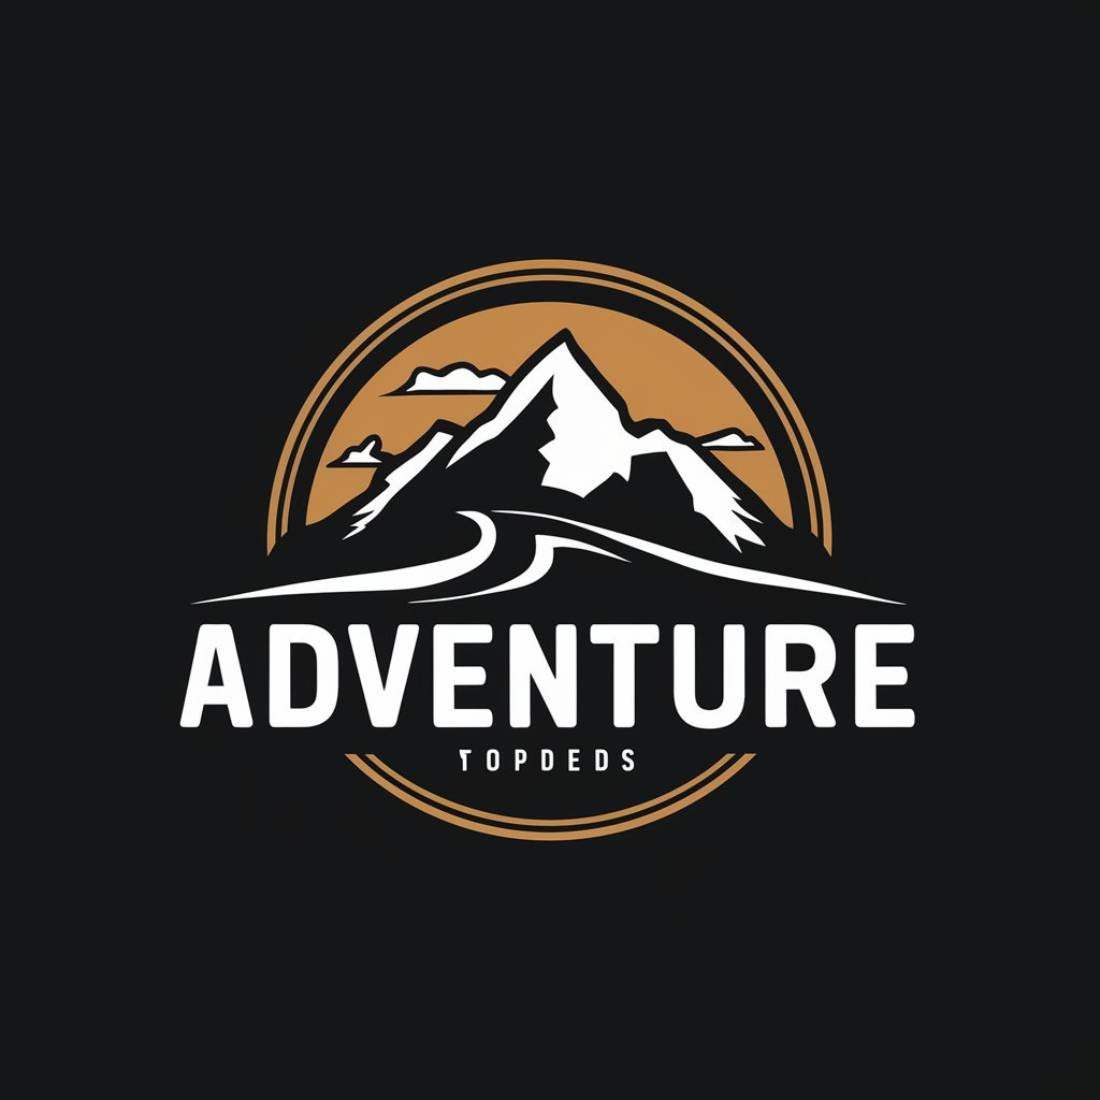 Adventure Logo Design cover image.